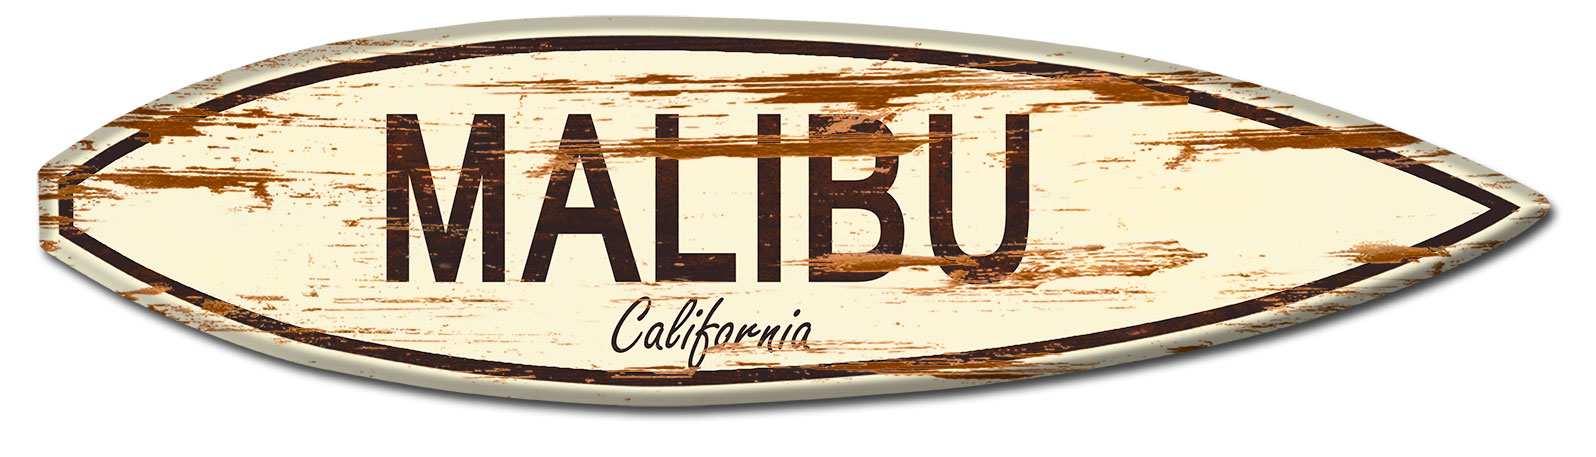 Malibu Surf Board Wood Print Vintage Sign